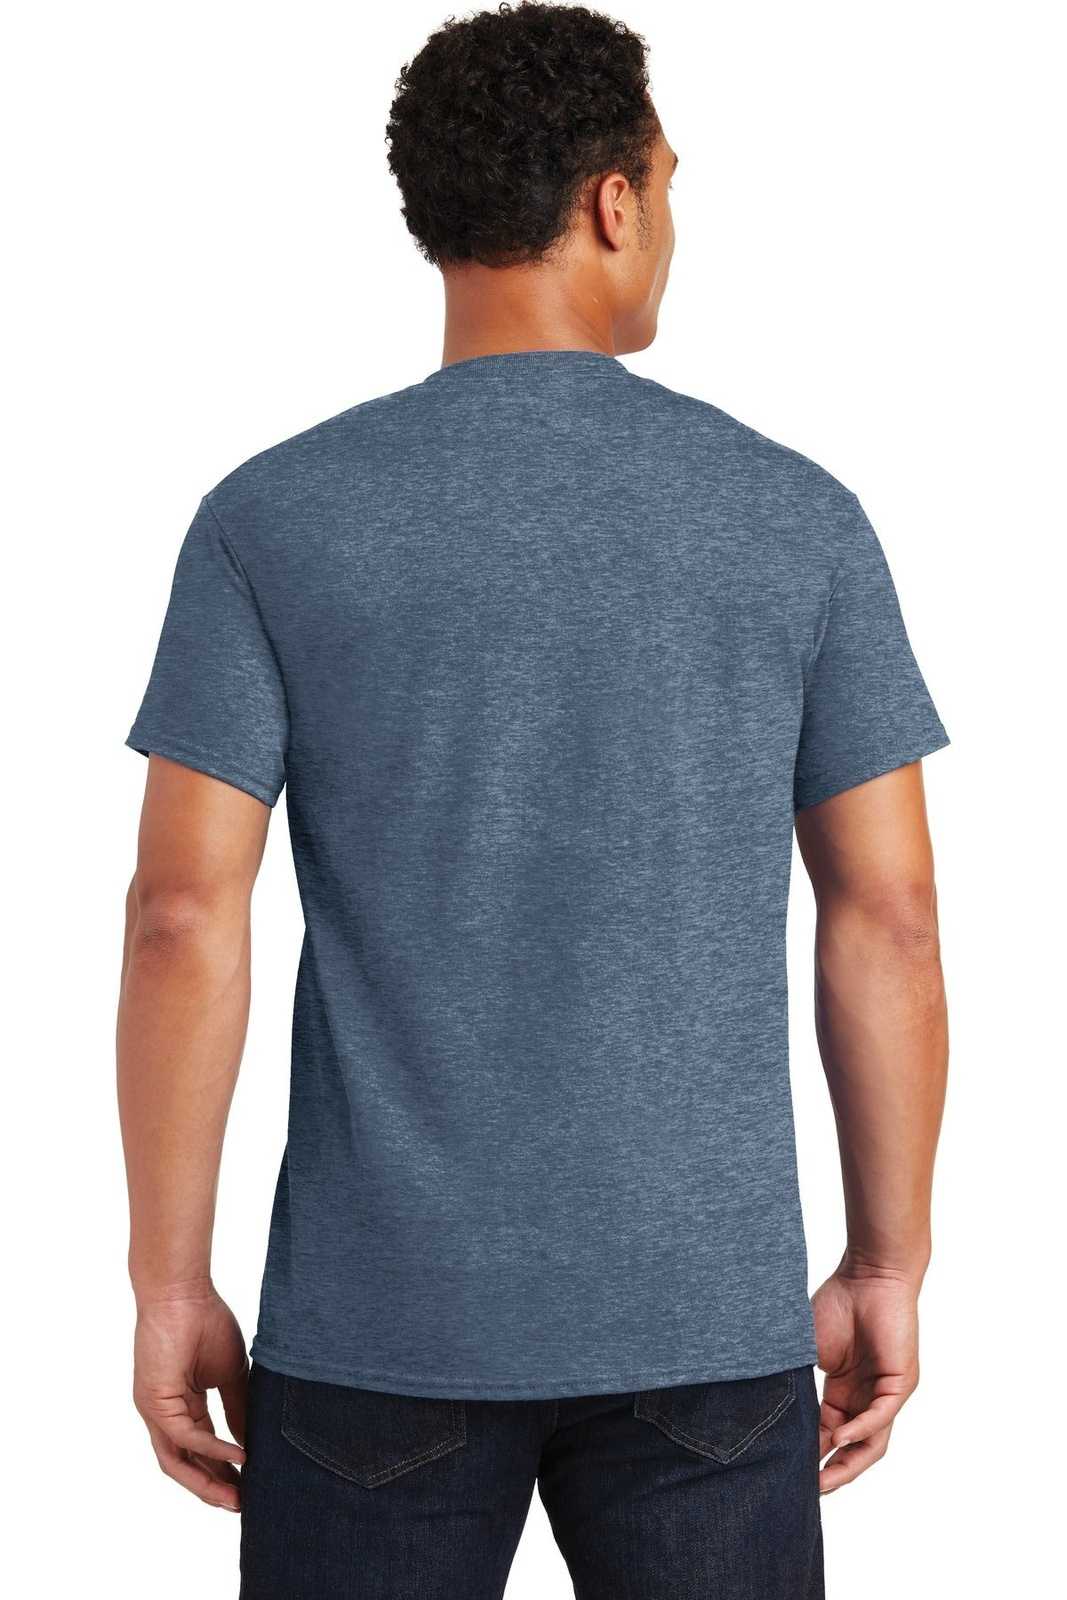 Gildan 2000 Ultra Cotton 100% Cotton T-Shirt - Heathered Indigo - HIT a Double